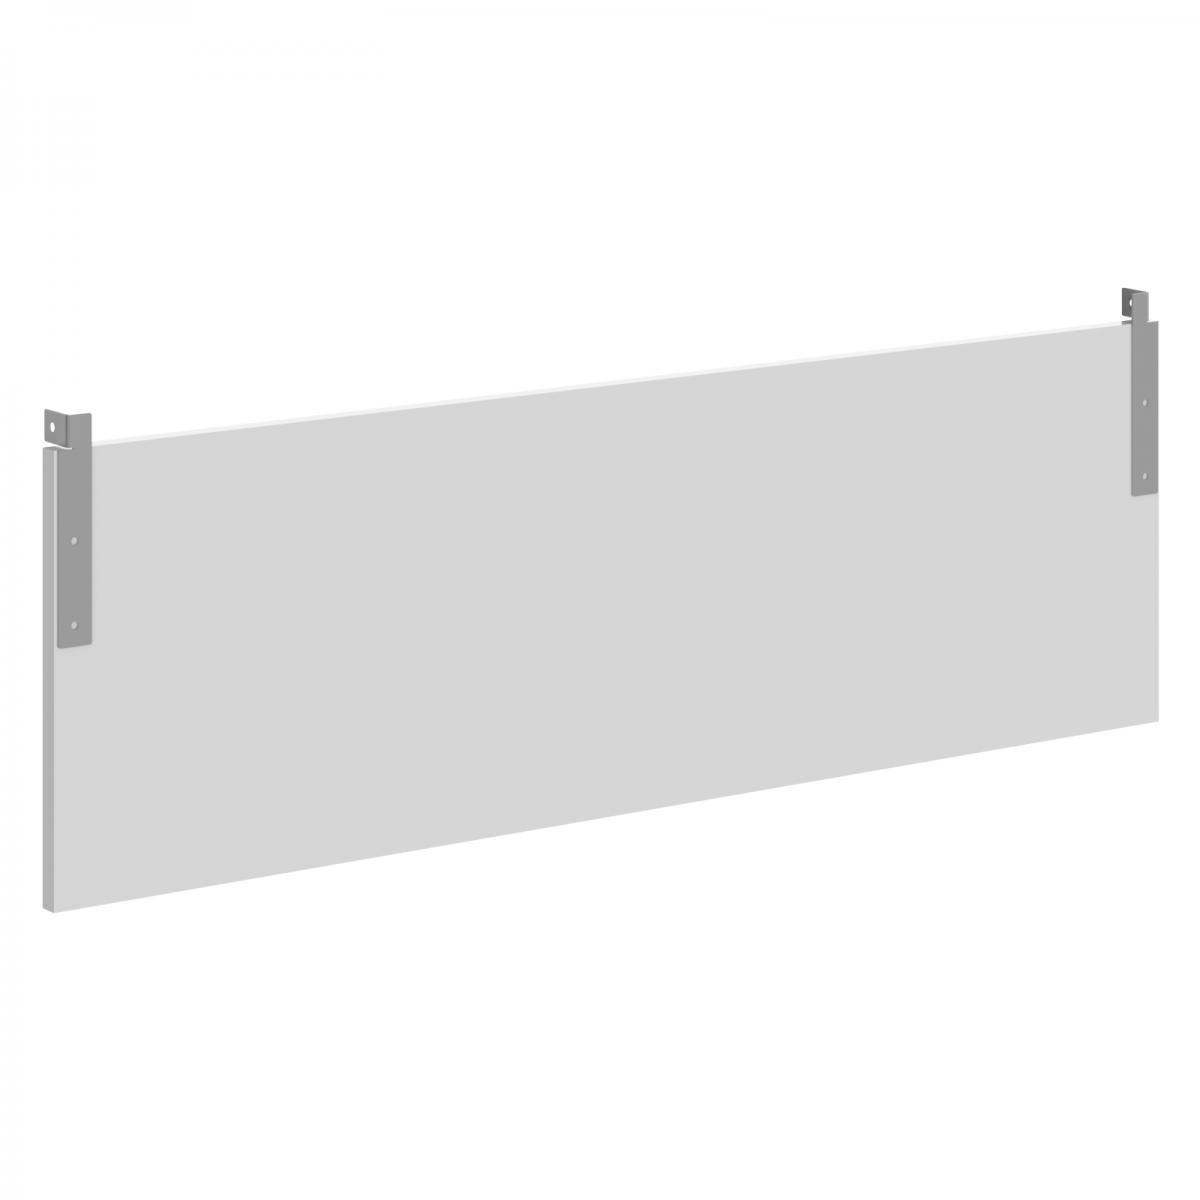 Фронтальная панель подвесная XGDST 127.1 Белый/Нержавеющая сталь 1100х350х18 XTEN GLOSS